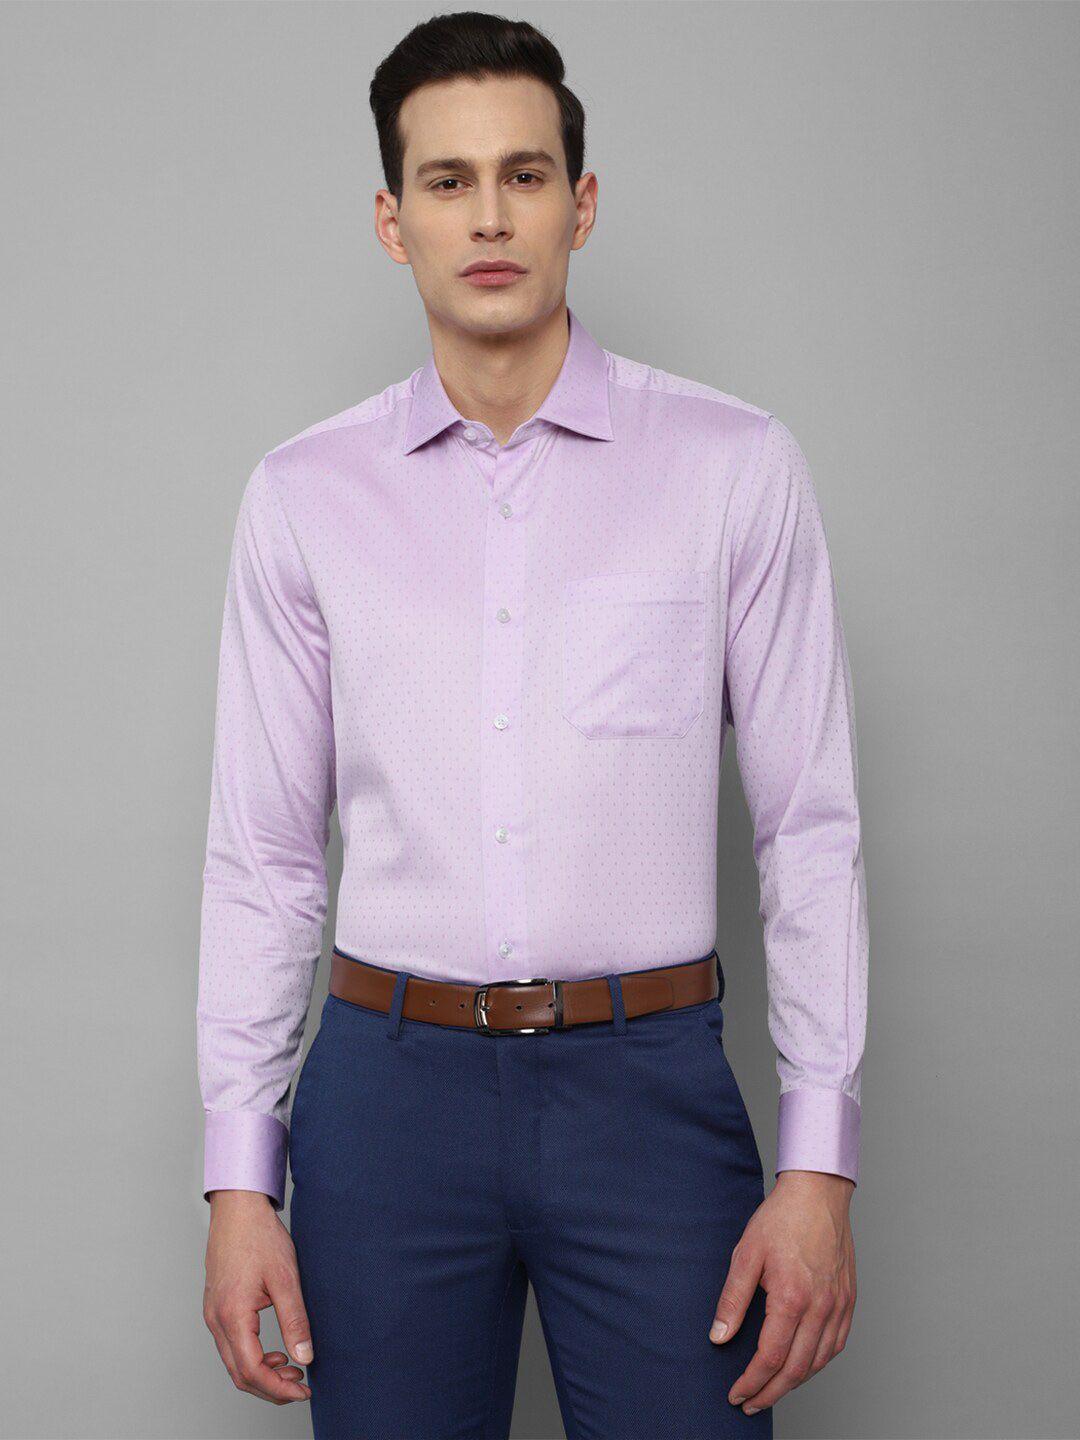 louis-philippe-men's-purple-formal-shirt